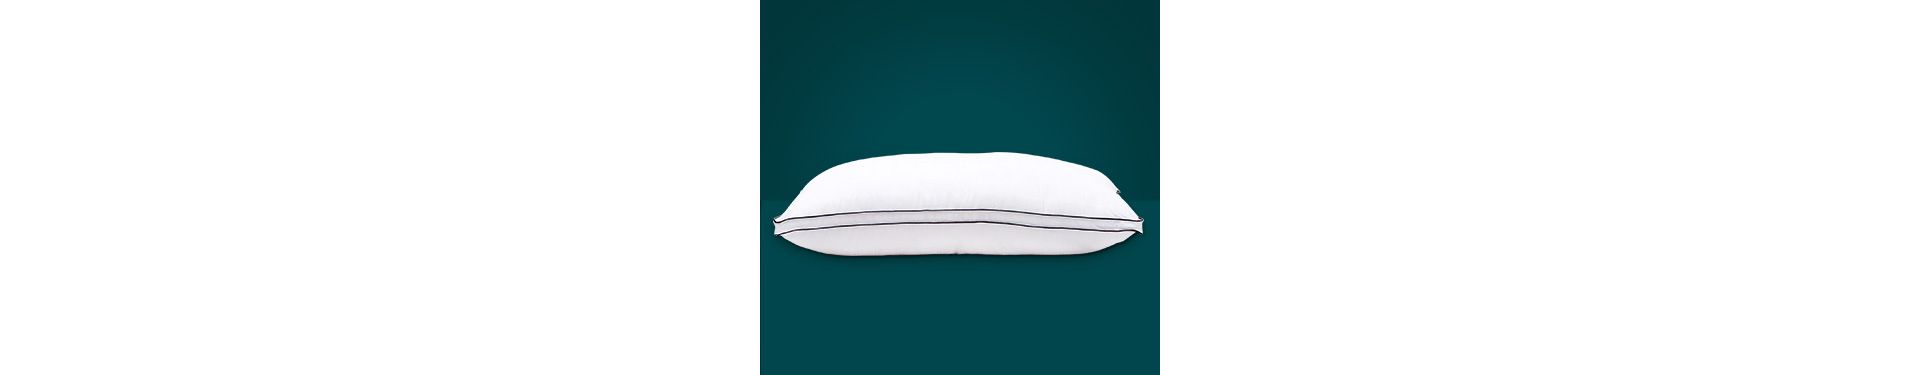 Decorative Image of Medium Pillow